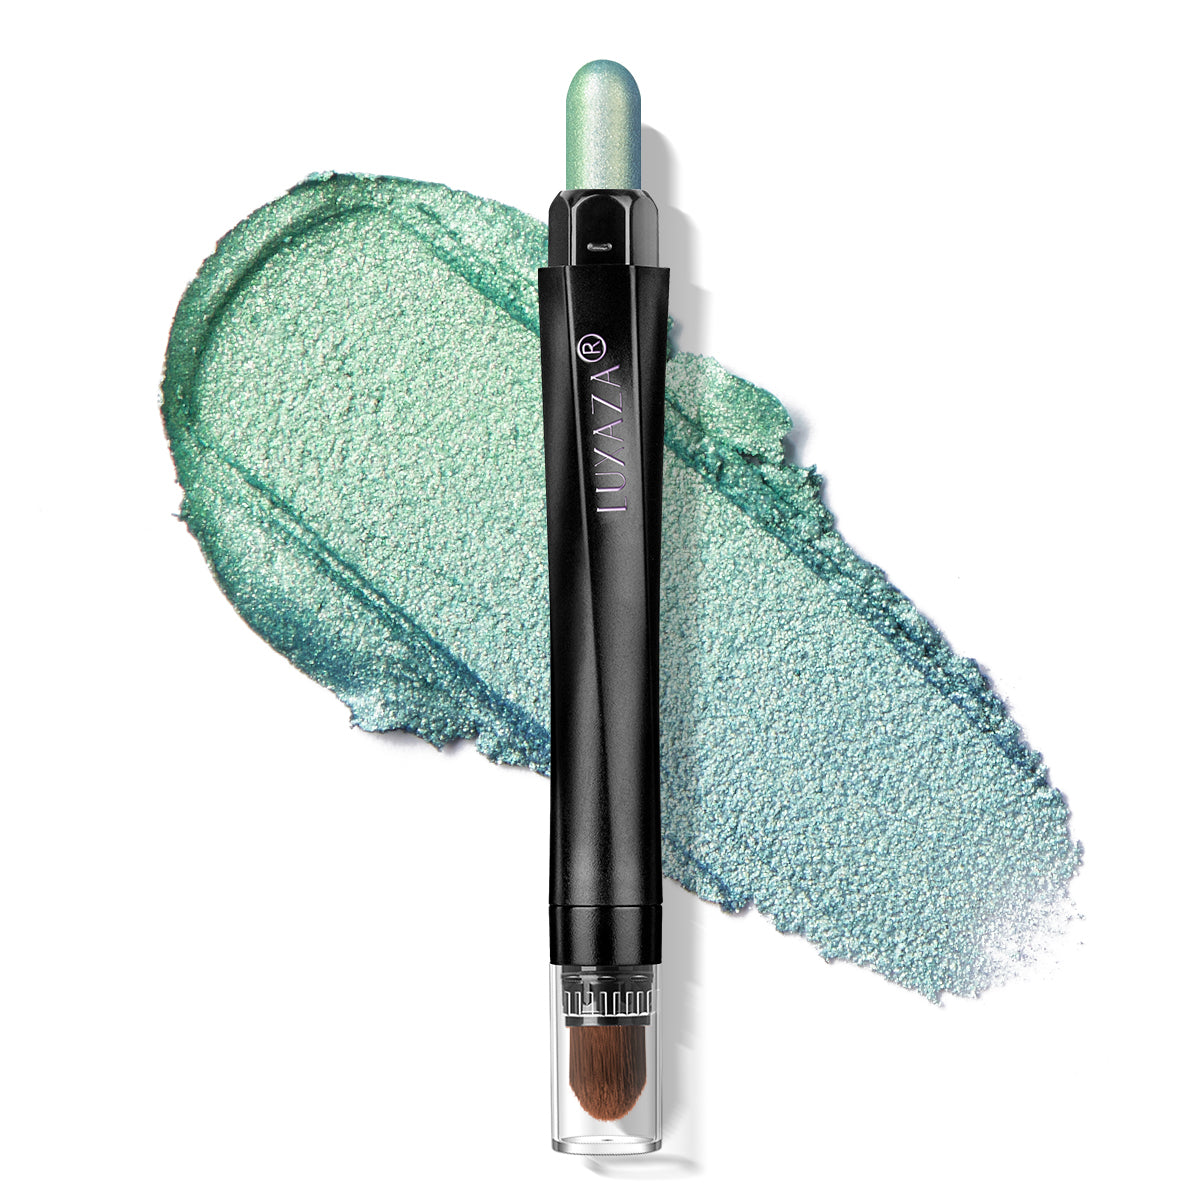 Luxaza - Multichrome Eyeshadow Stick #205 - Green Sheen